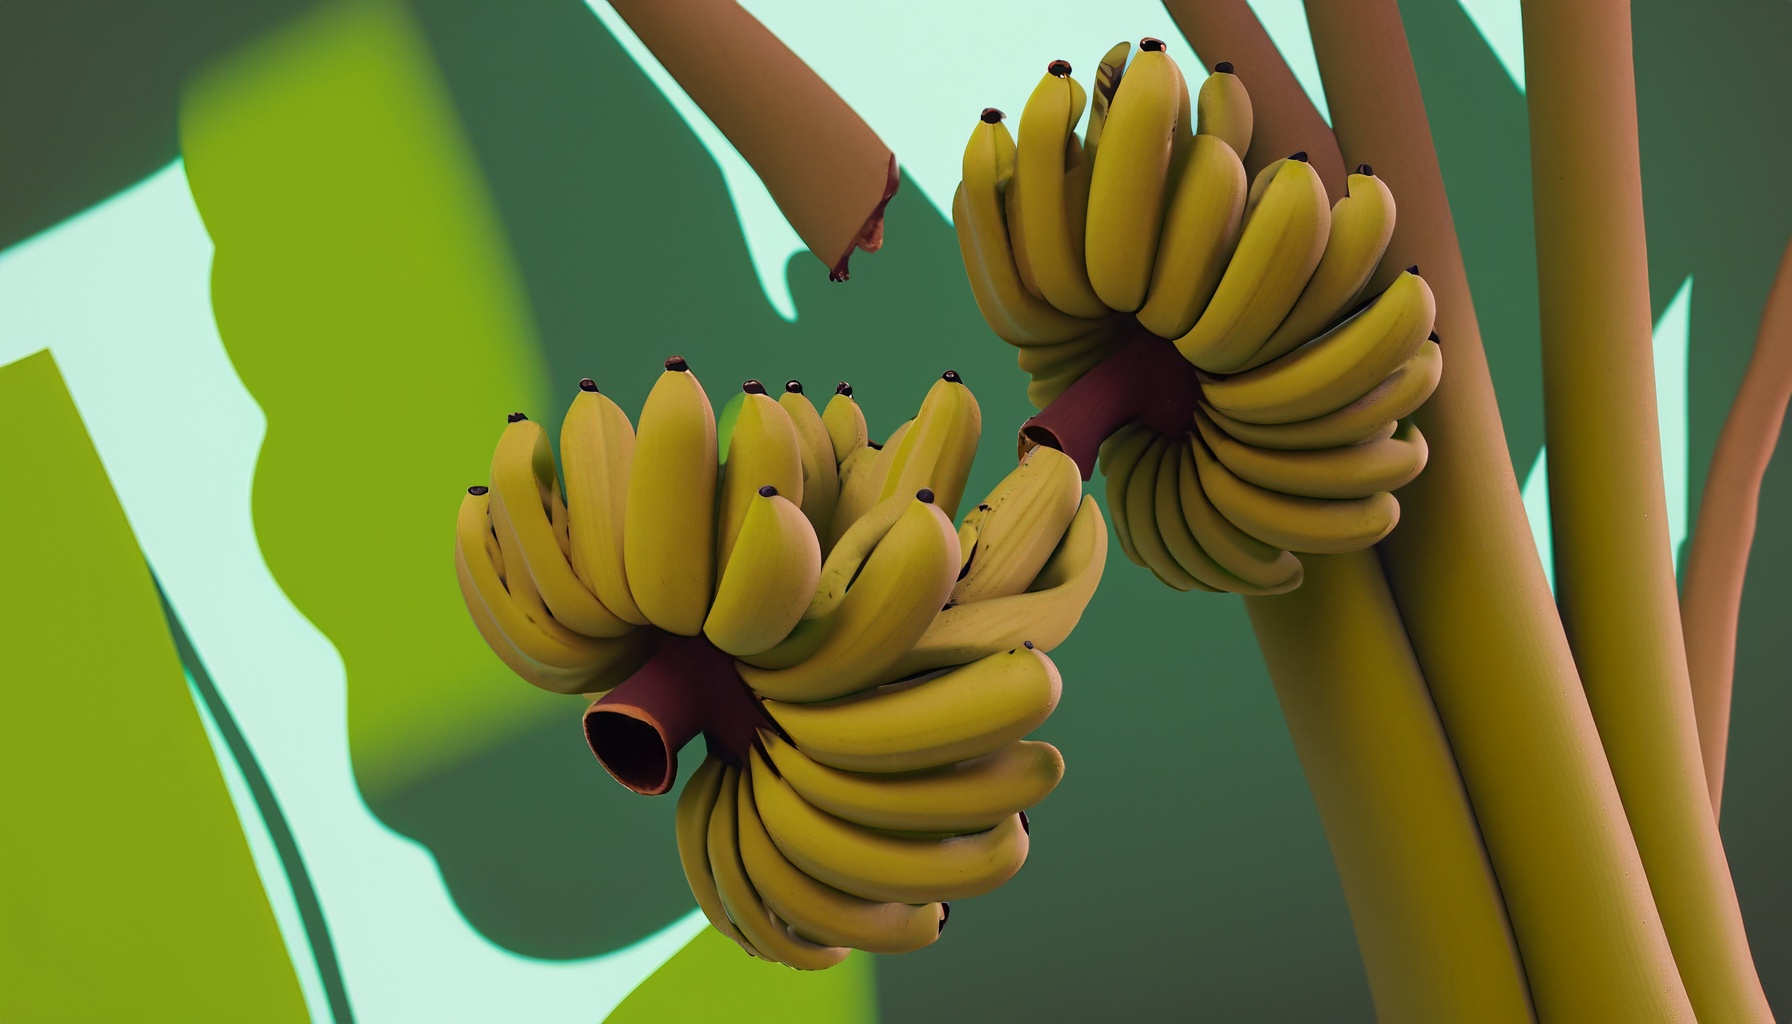 Bananas are berries